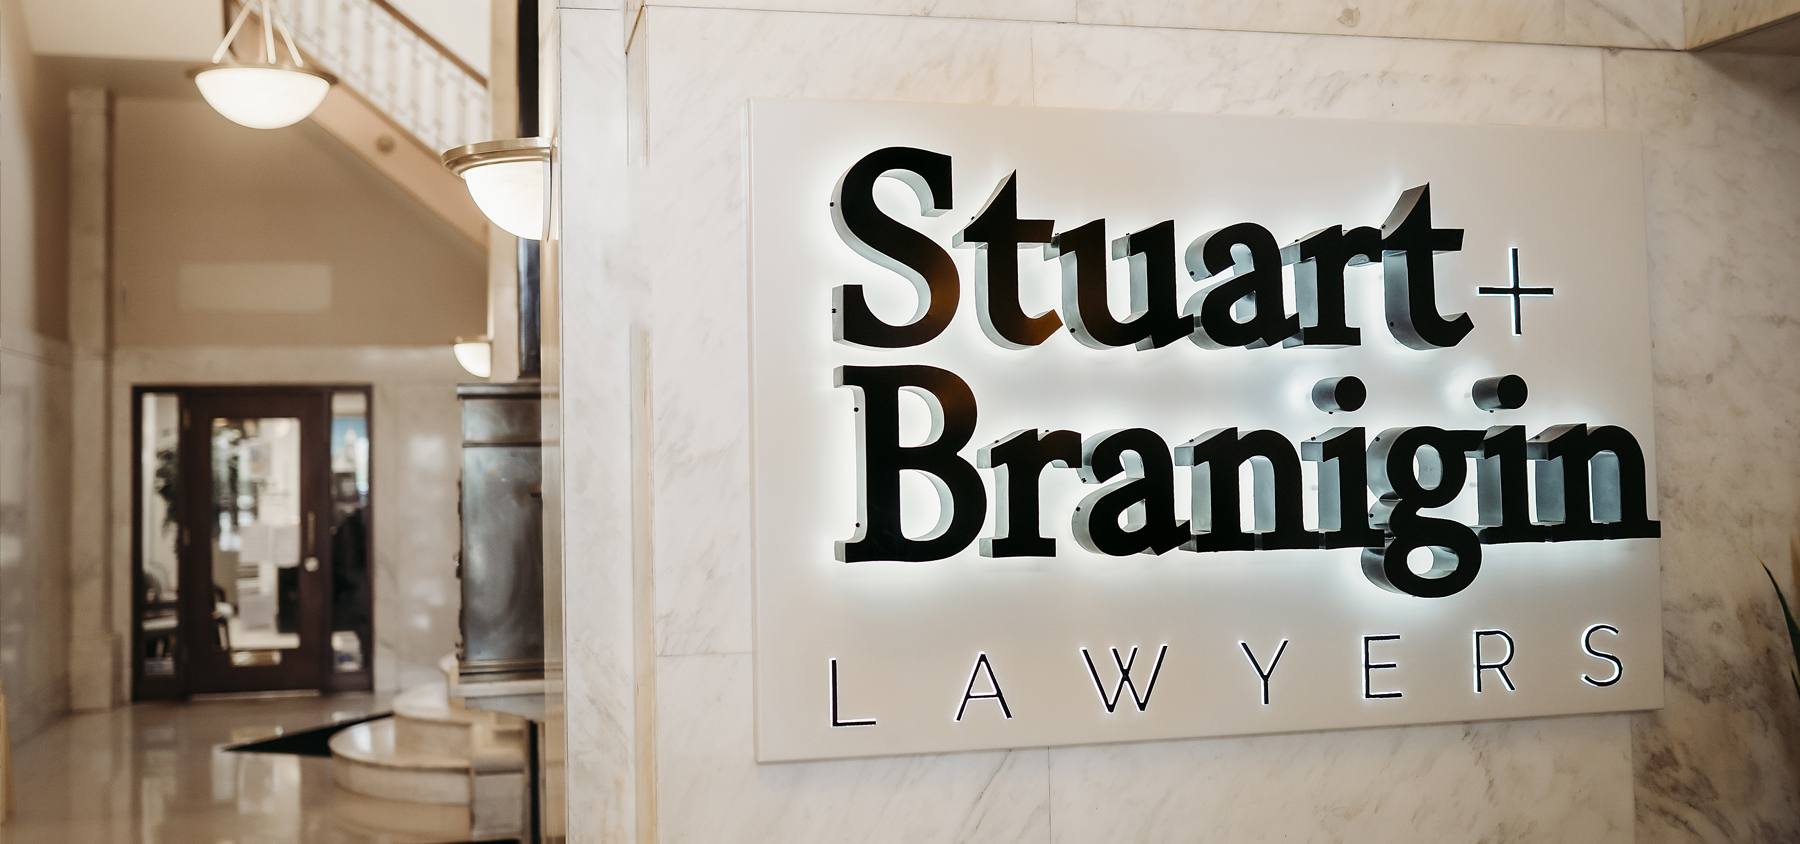 Business Sign for Litigation Attorneys Stuart + Branigin